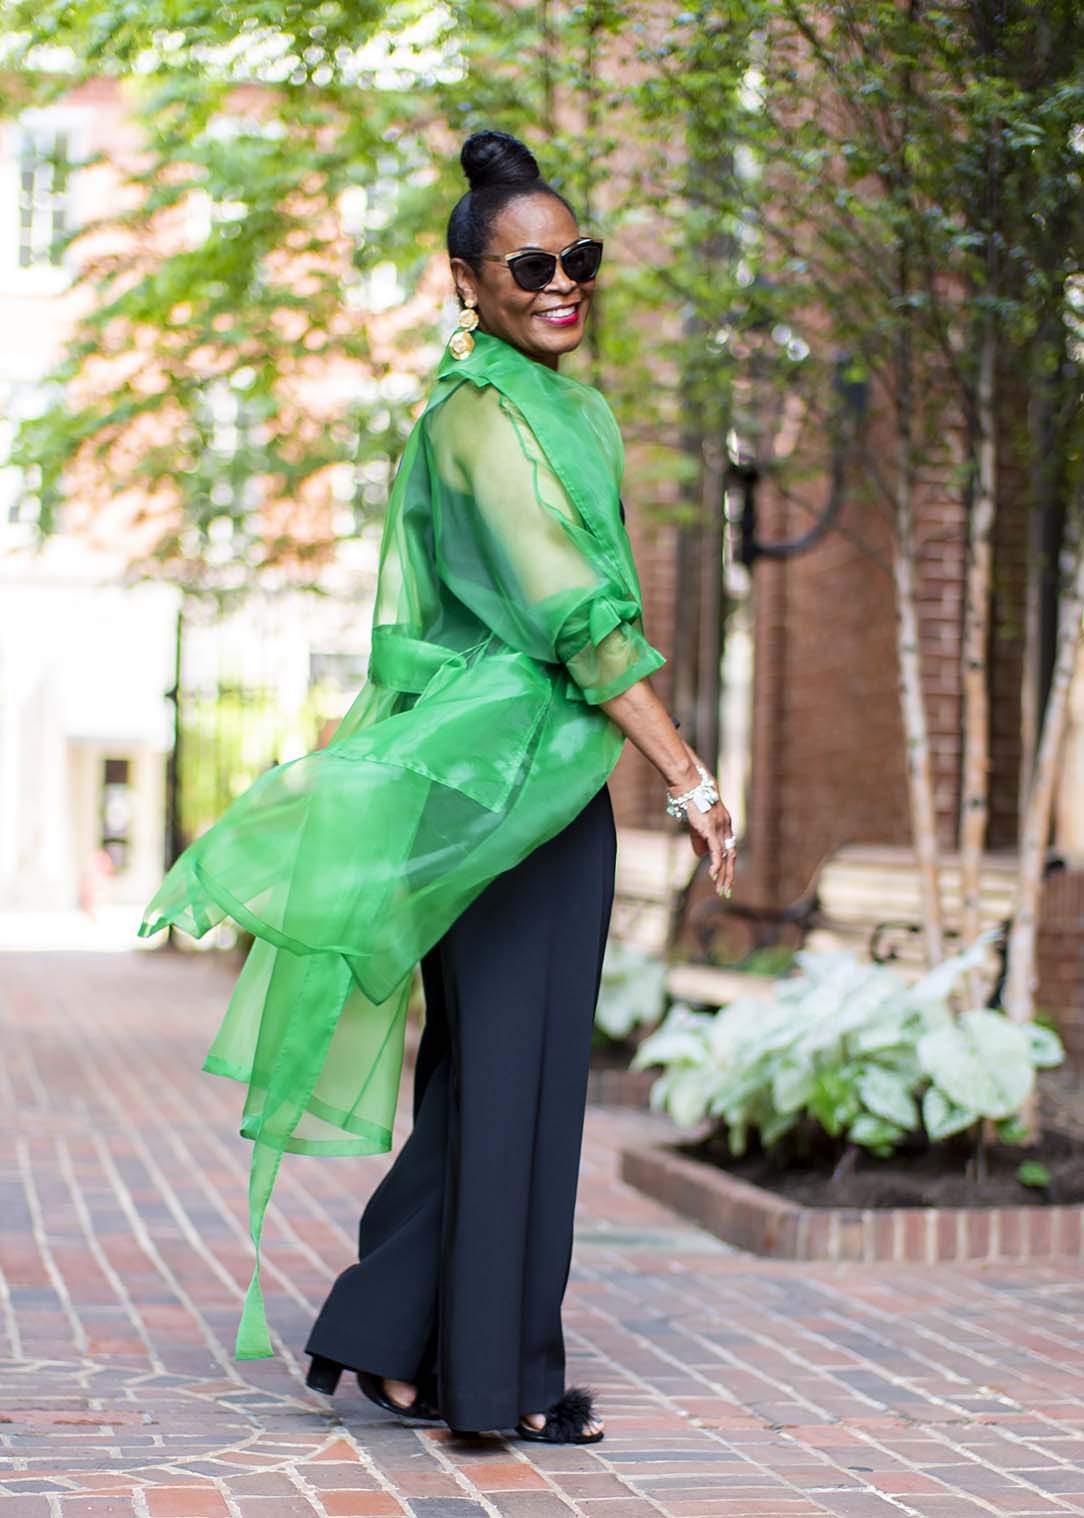 Frascara Black Jumpsuit; My Happy Harmony Hue - Emerald Green. Photos: Face Forward Photography - Kenya Jones